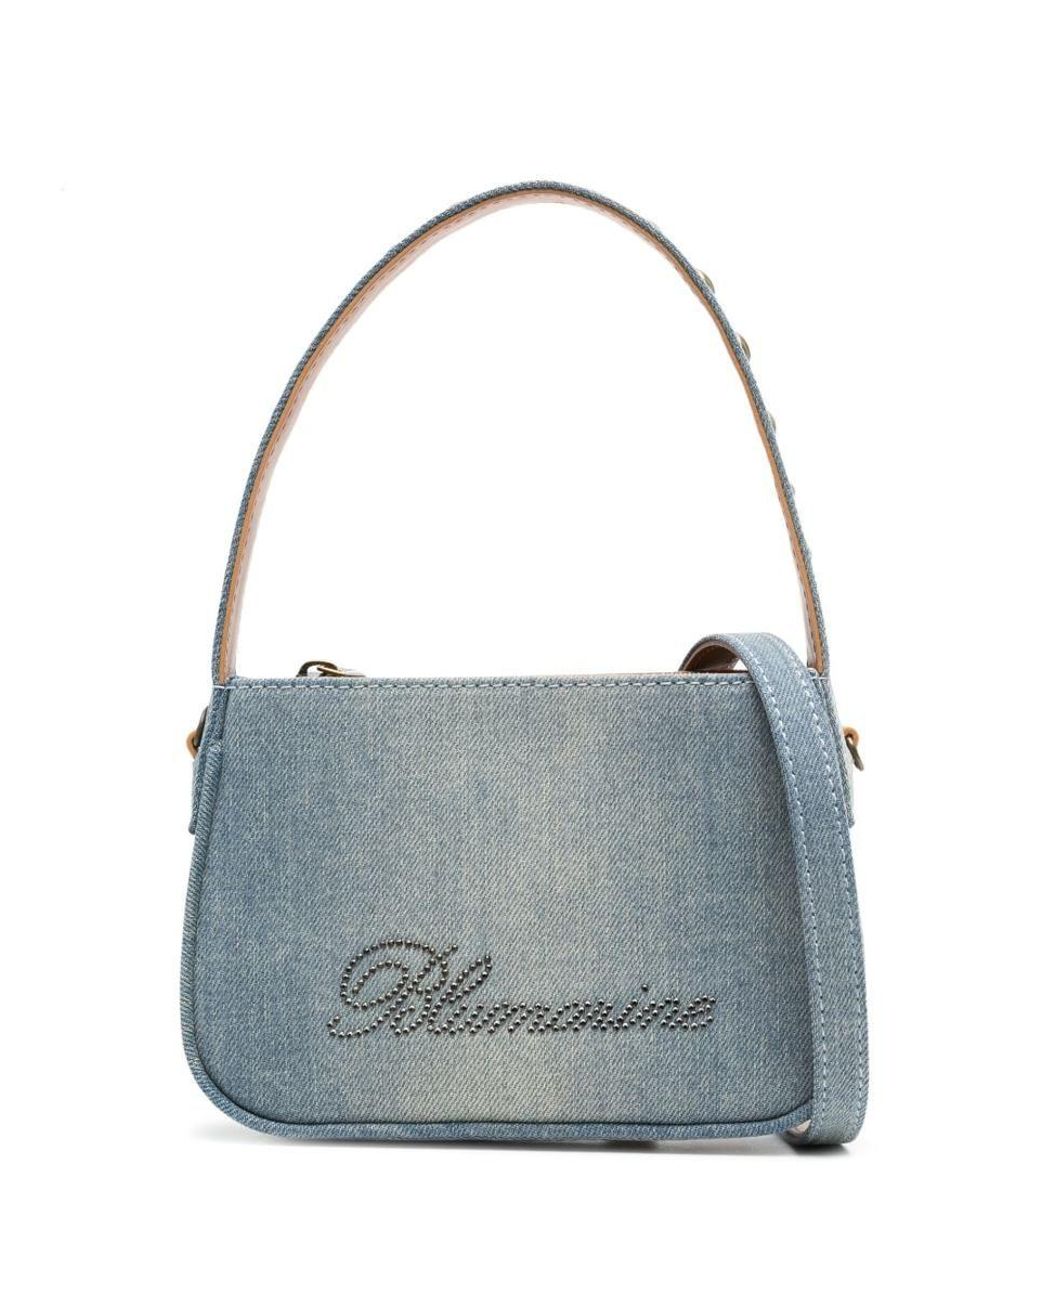 Blumarine Logo Denim Handbag in Blue | Lyst